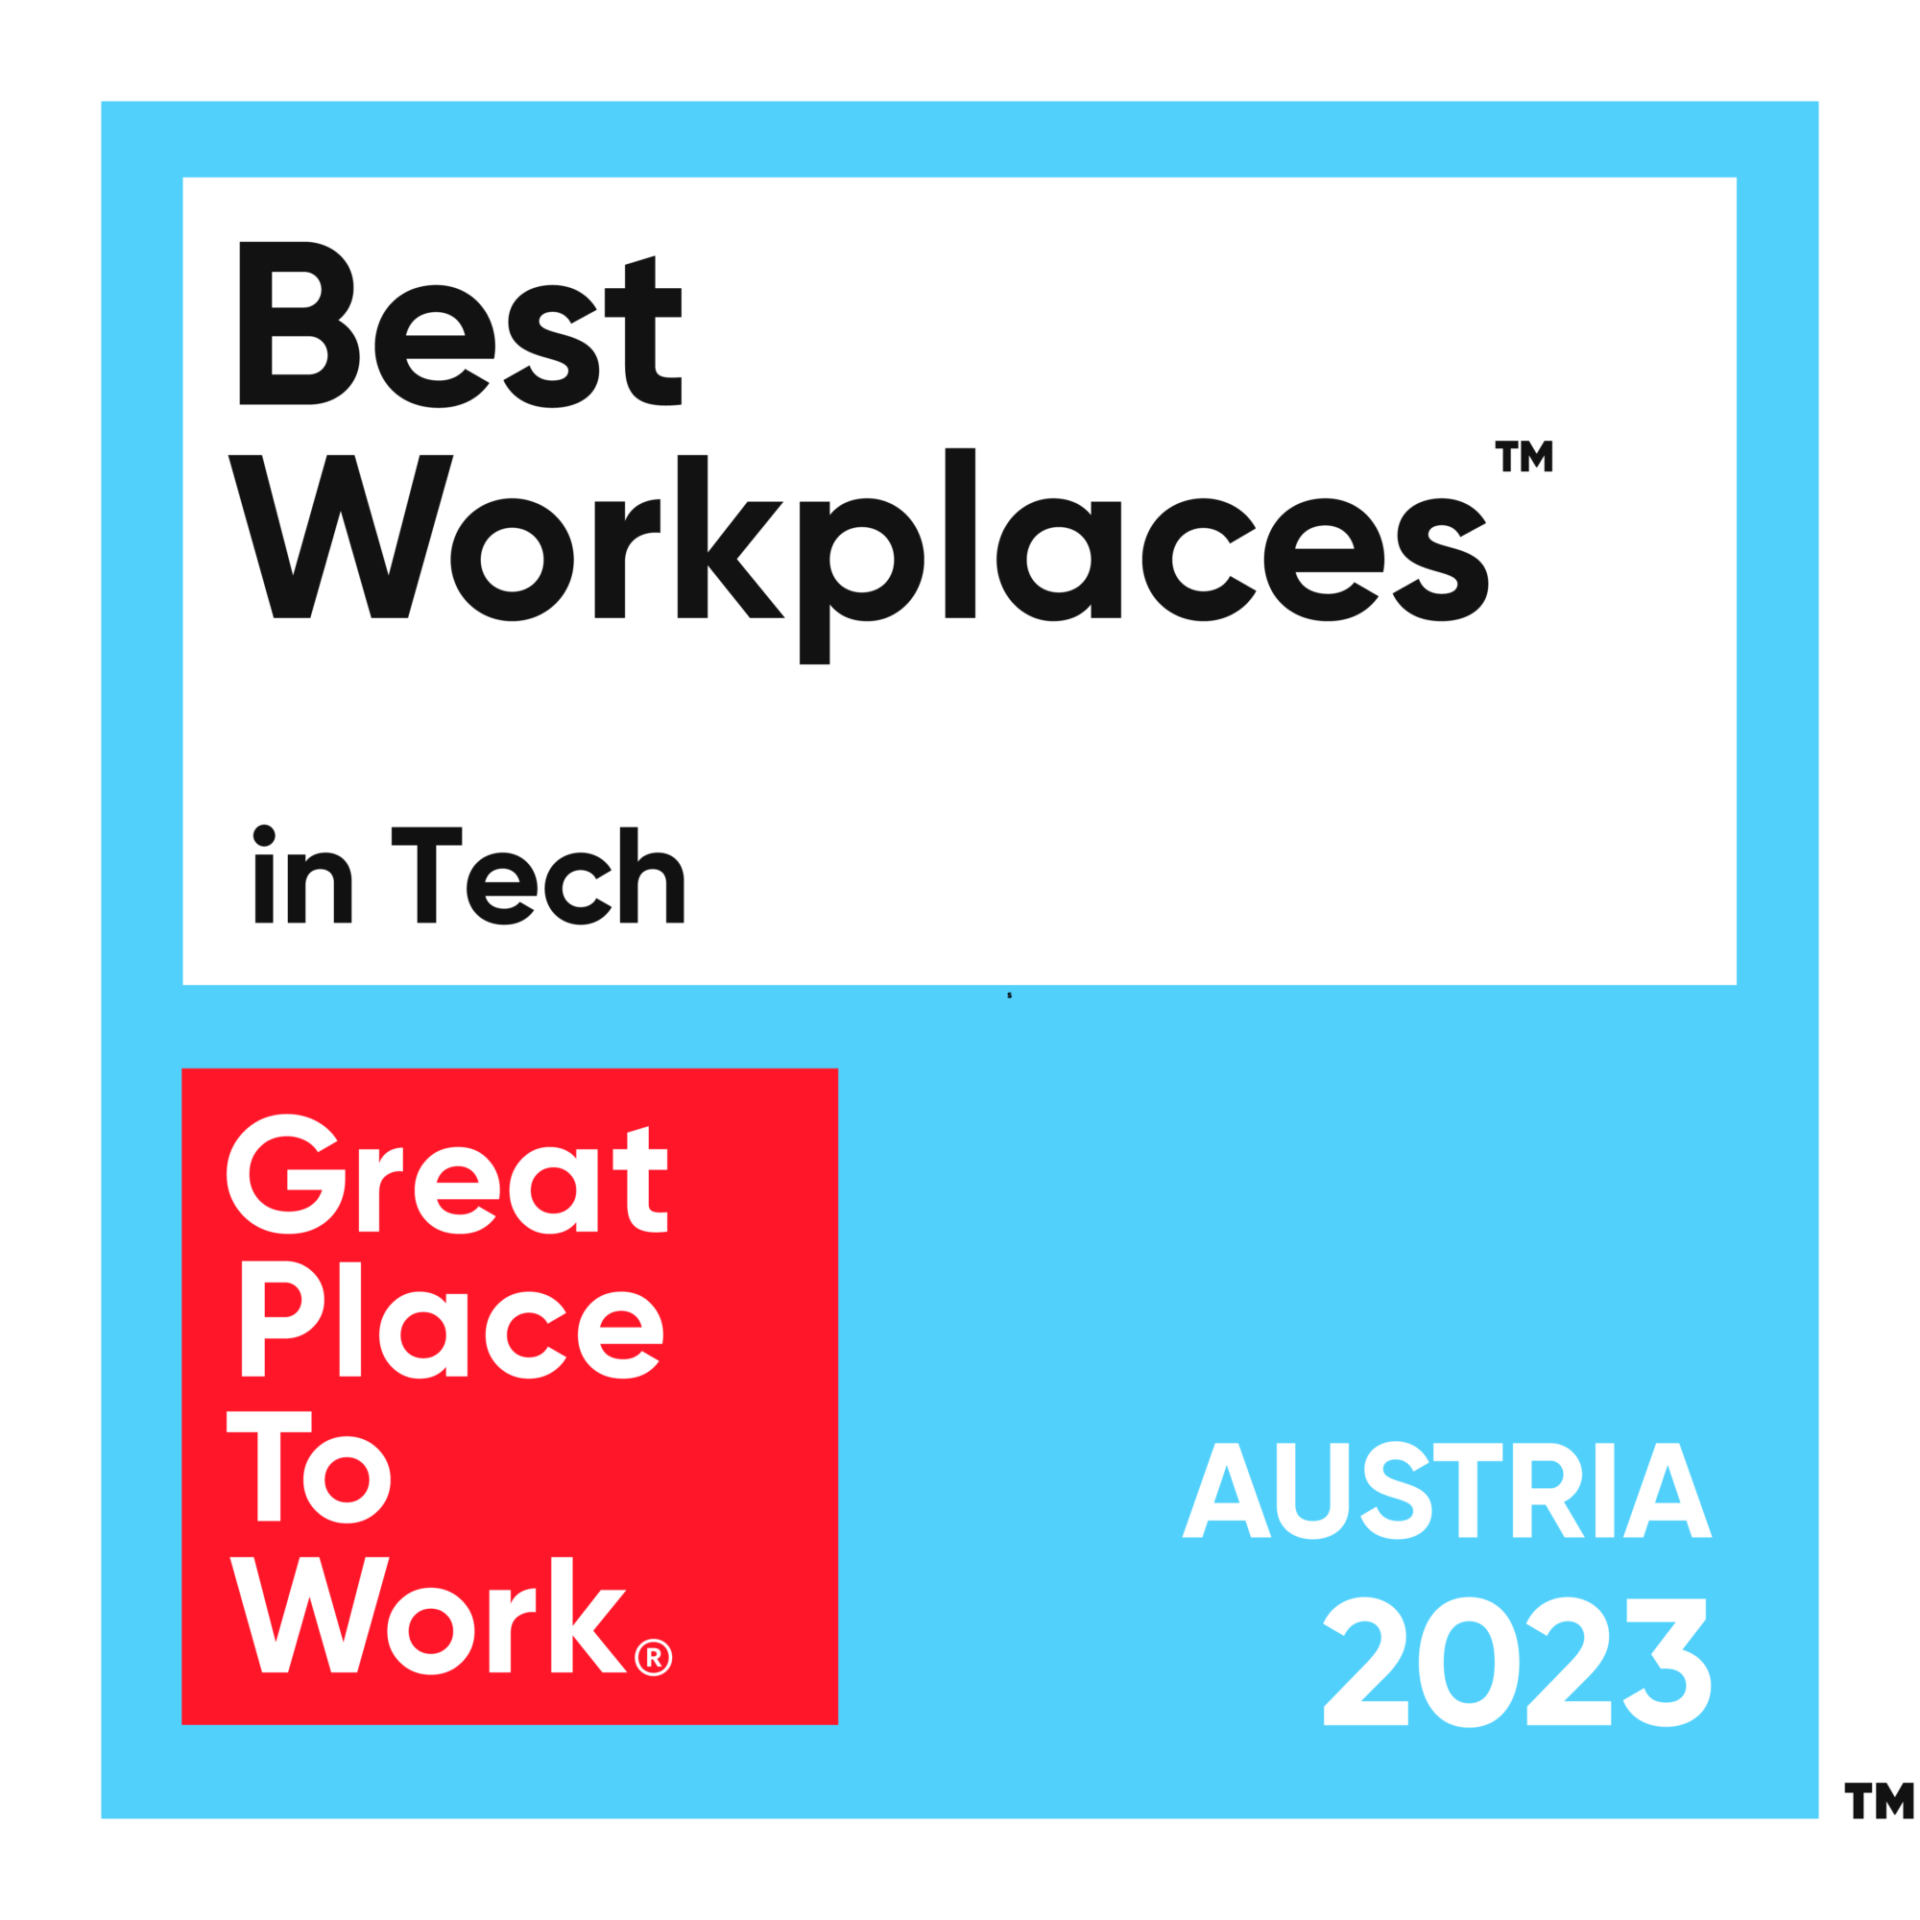 Best Workplaces in Tech 2023 - Austria